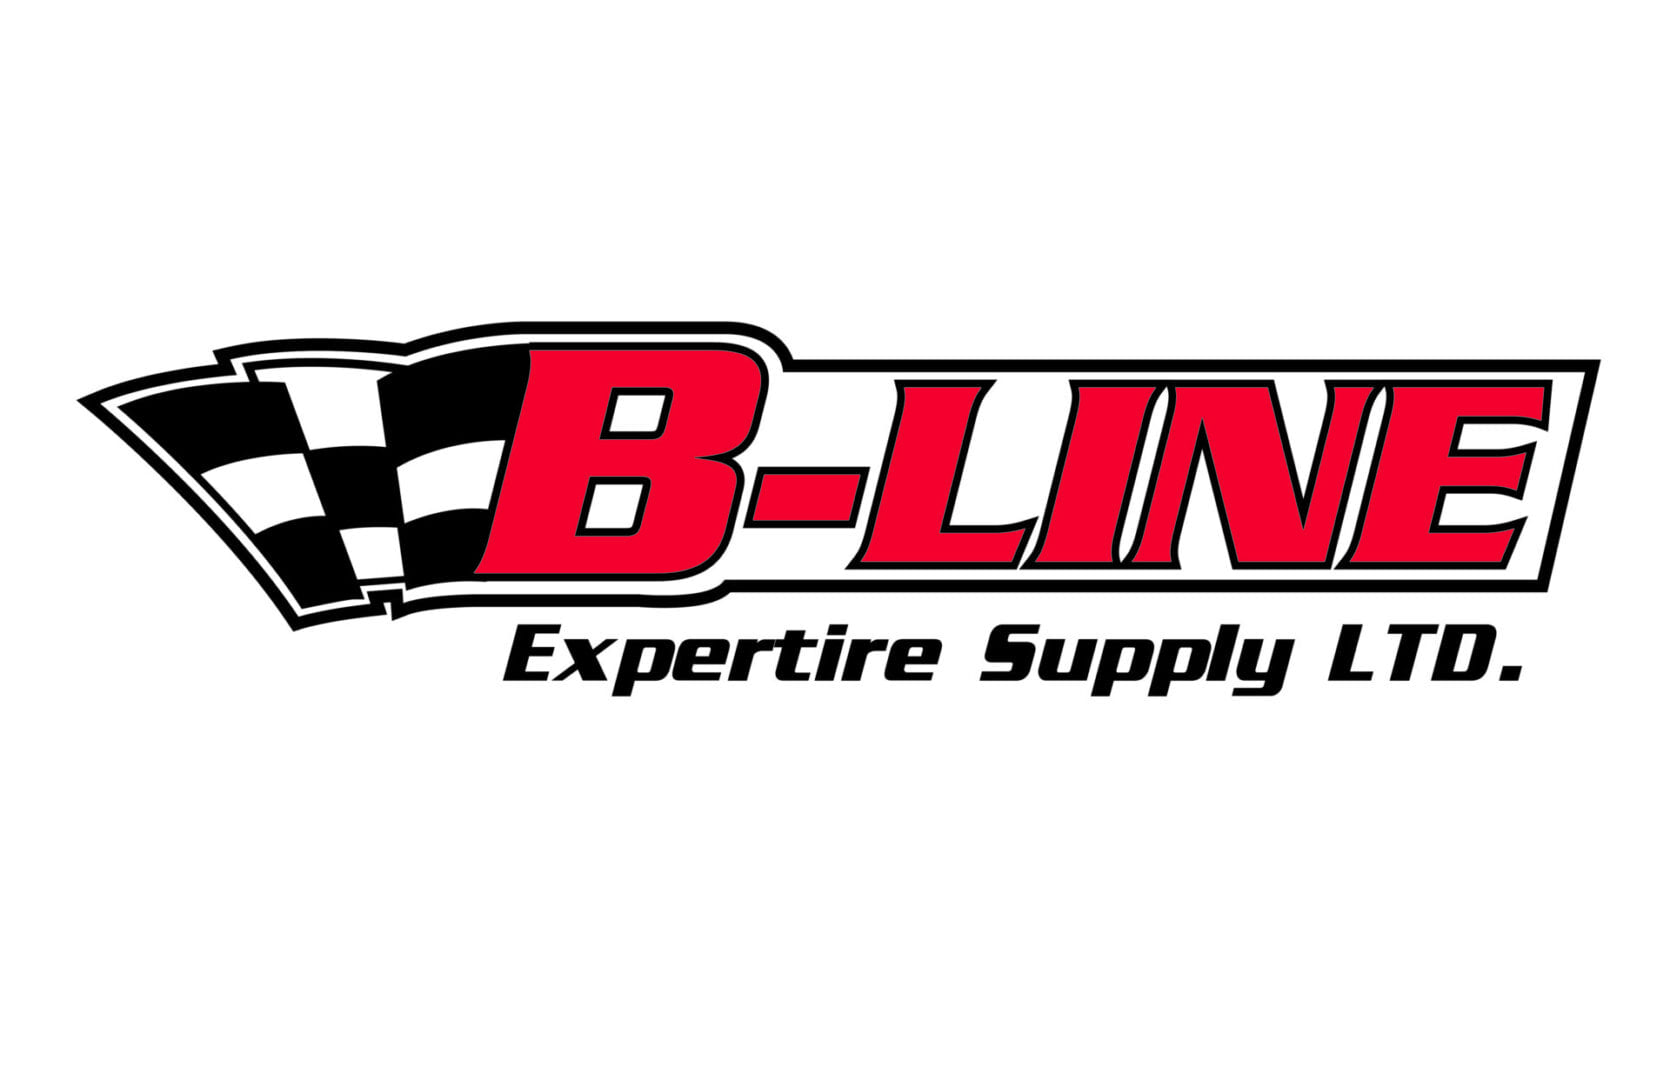 Display of B Line Expertire supply Ltd